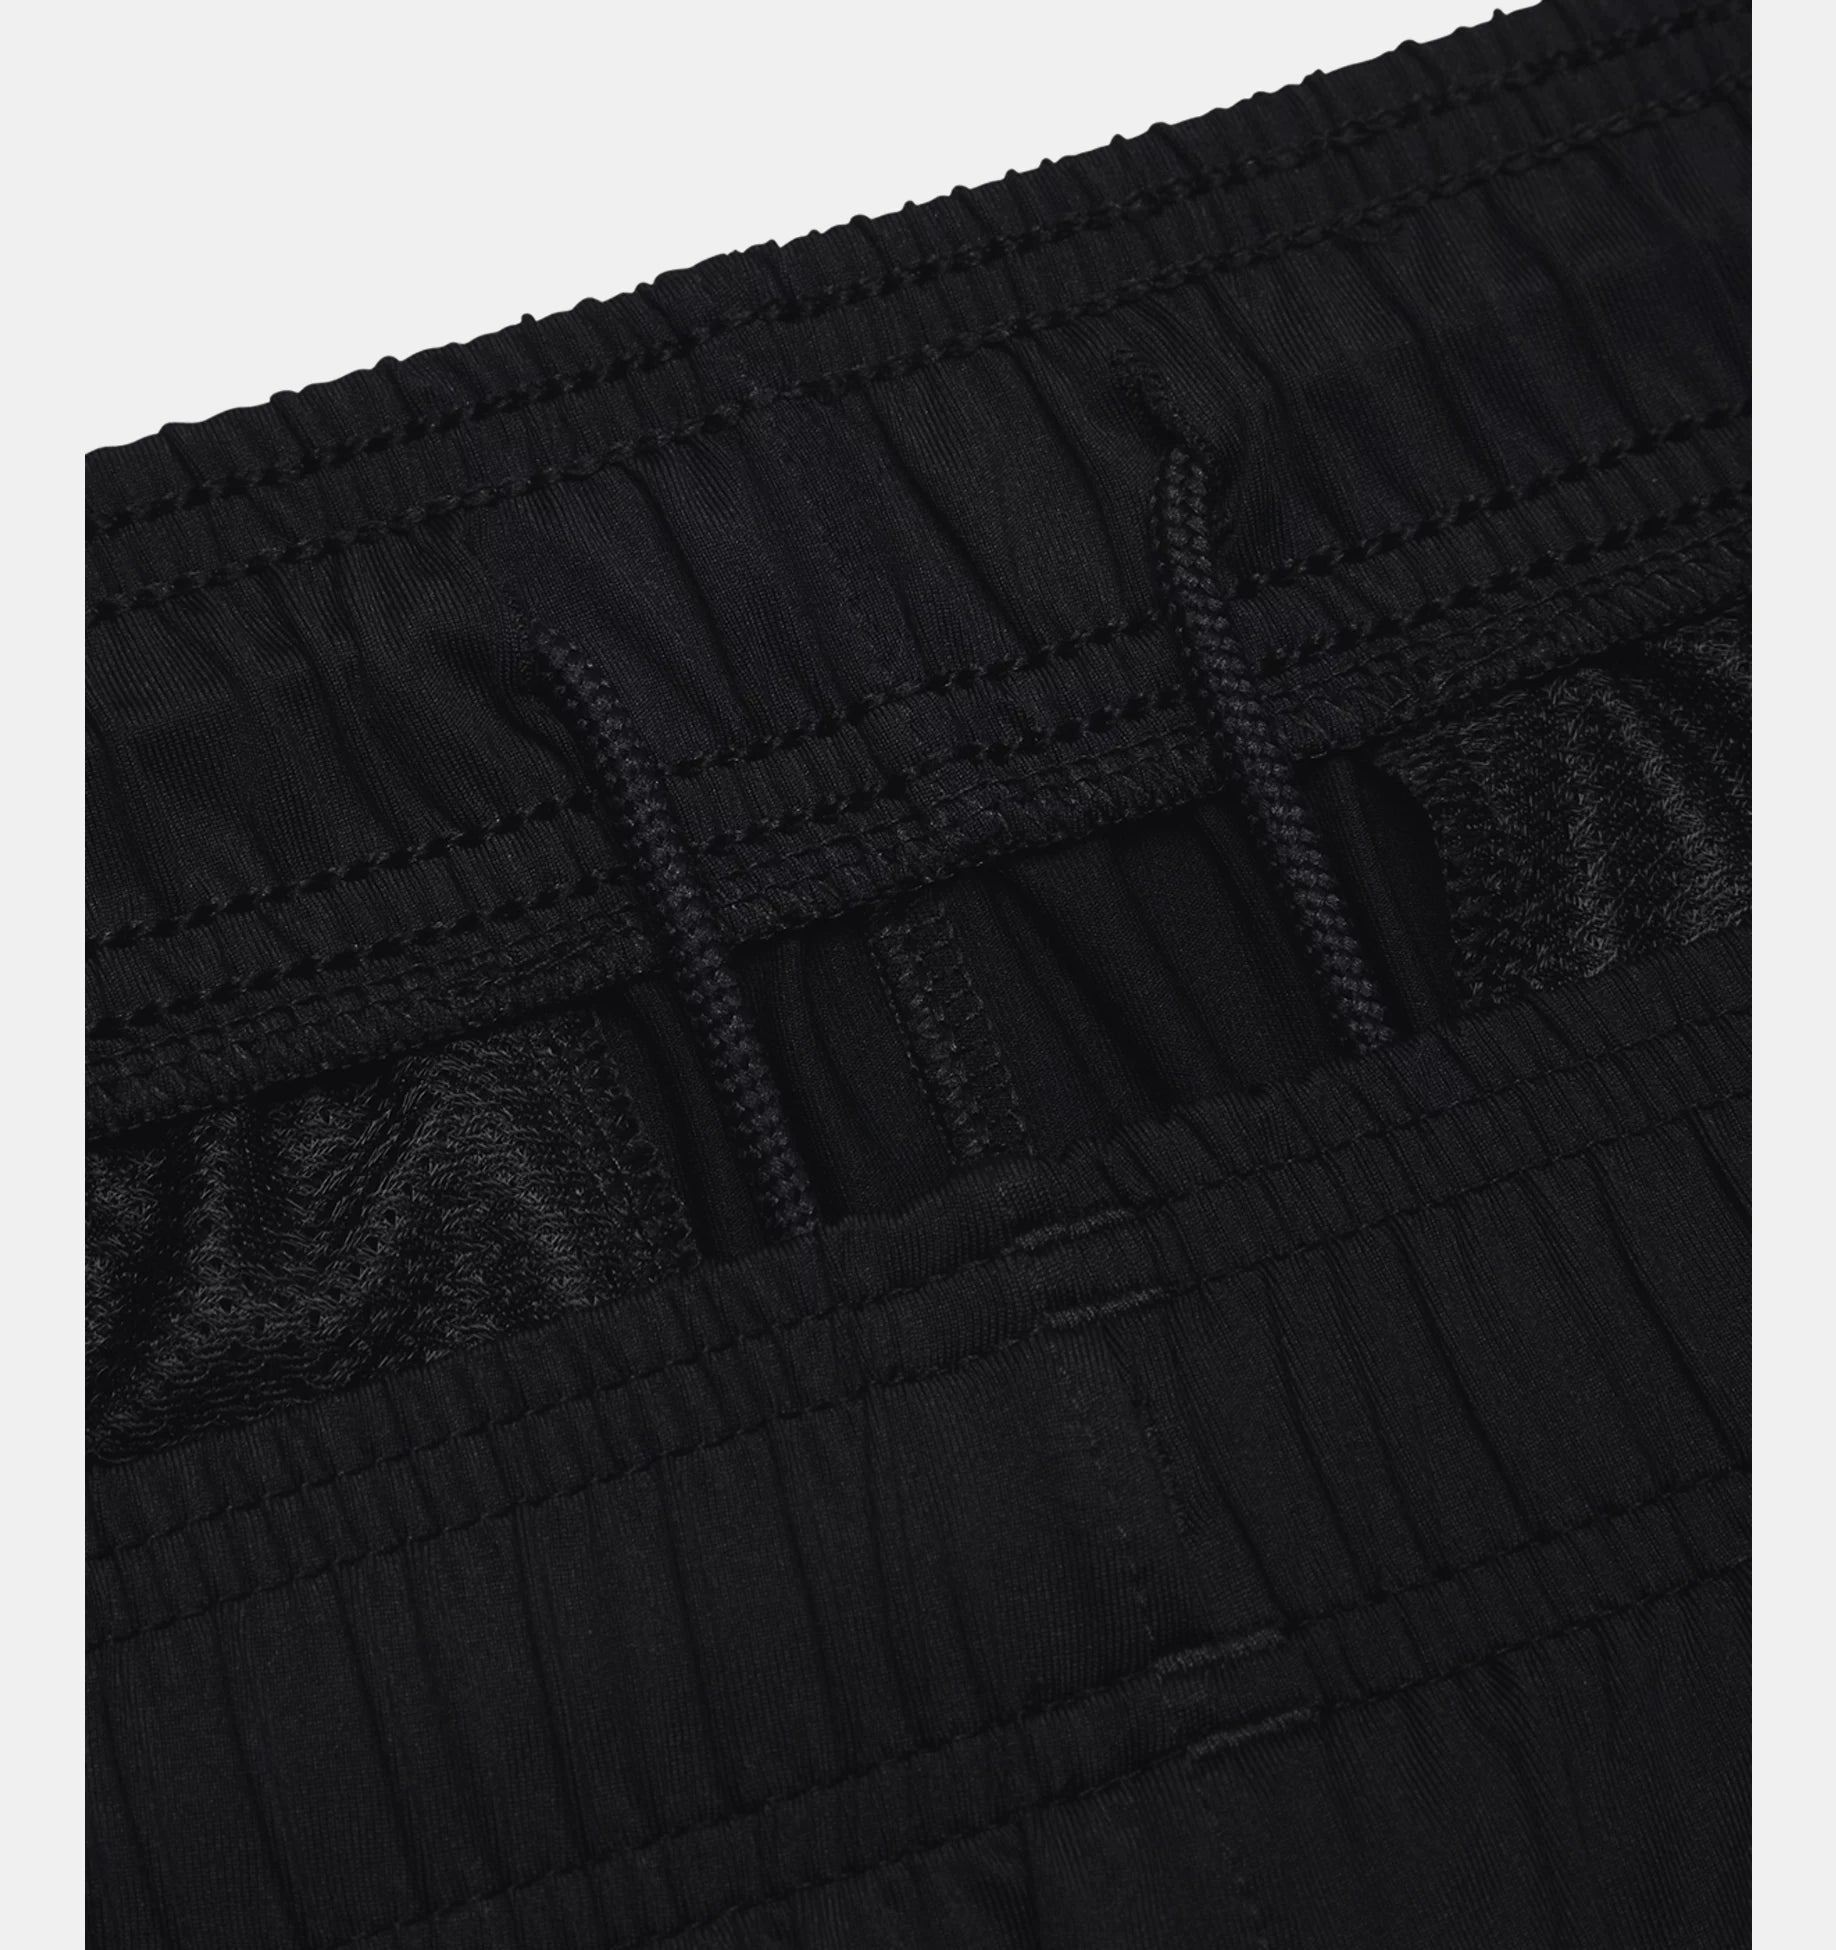 Men's UA Tech™ Vent Shorts - Black - 001